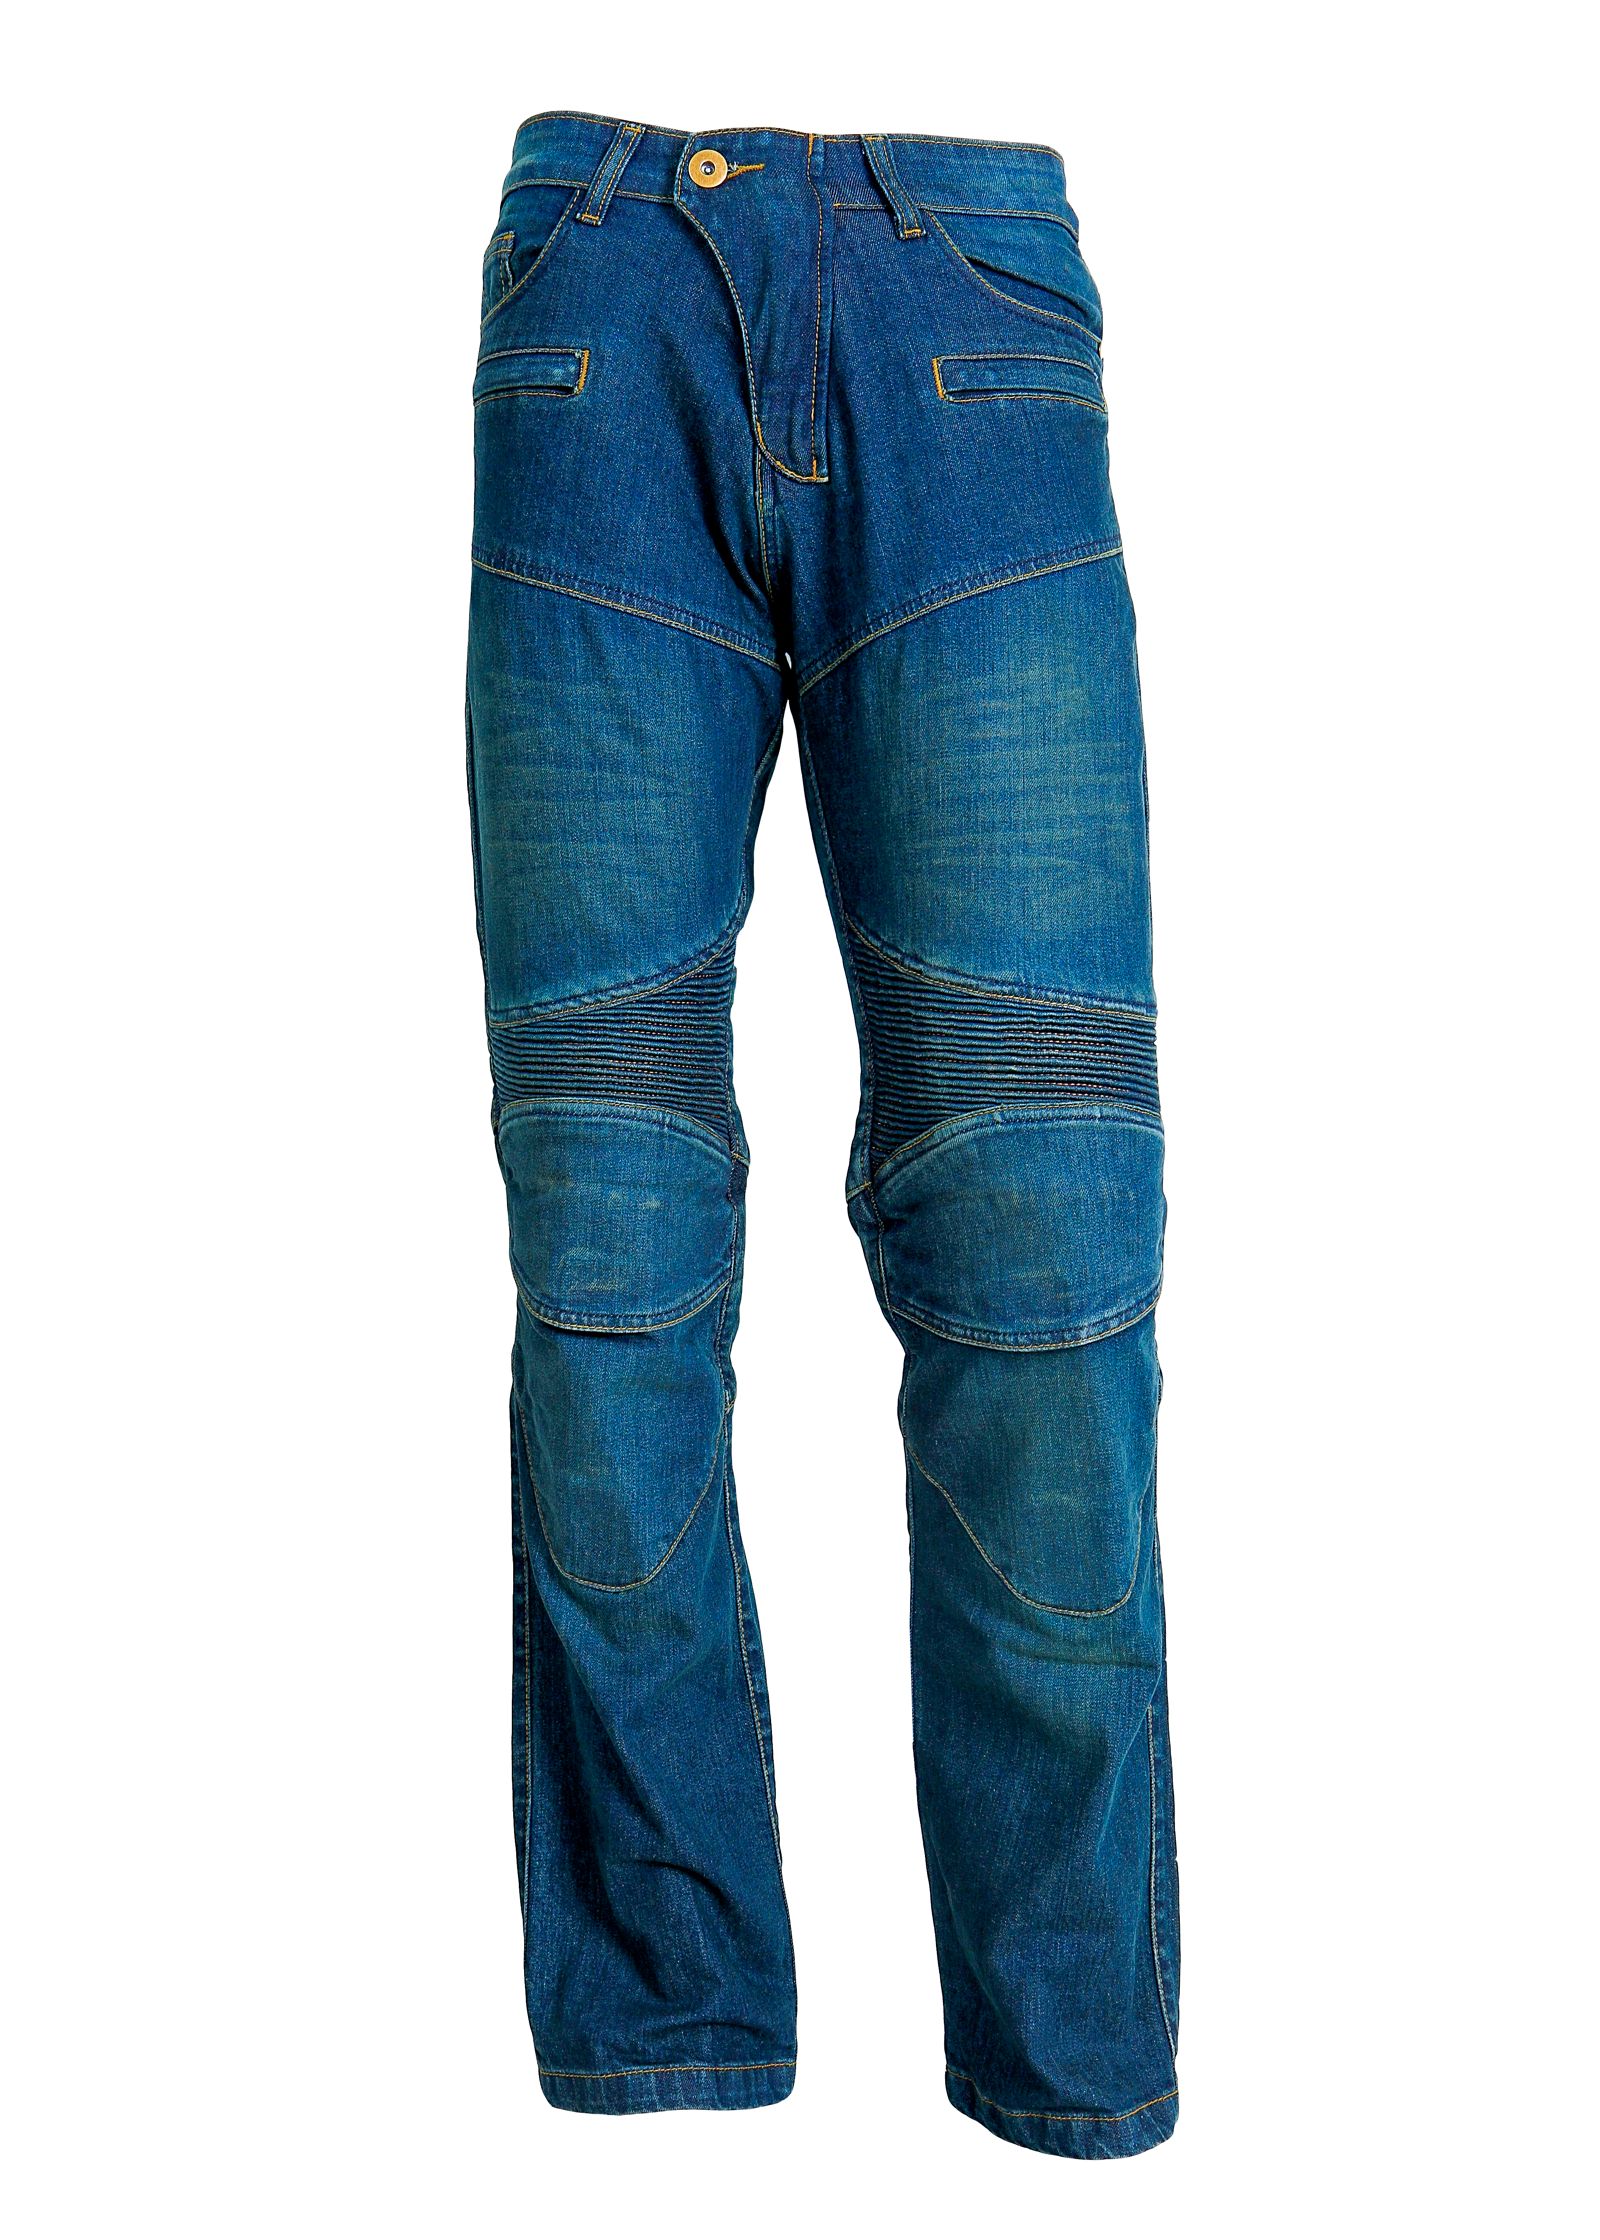 Flexer – Motorcycle Jeans For Men | Neu Spotlite || A Clothing Company